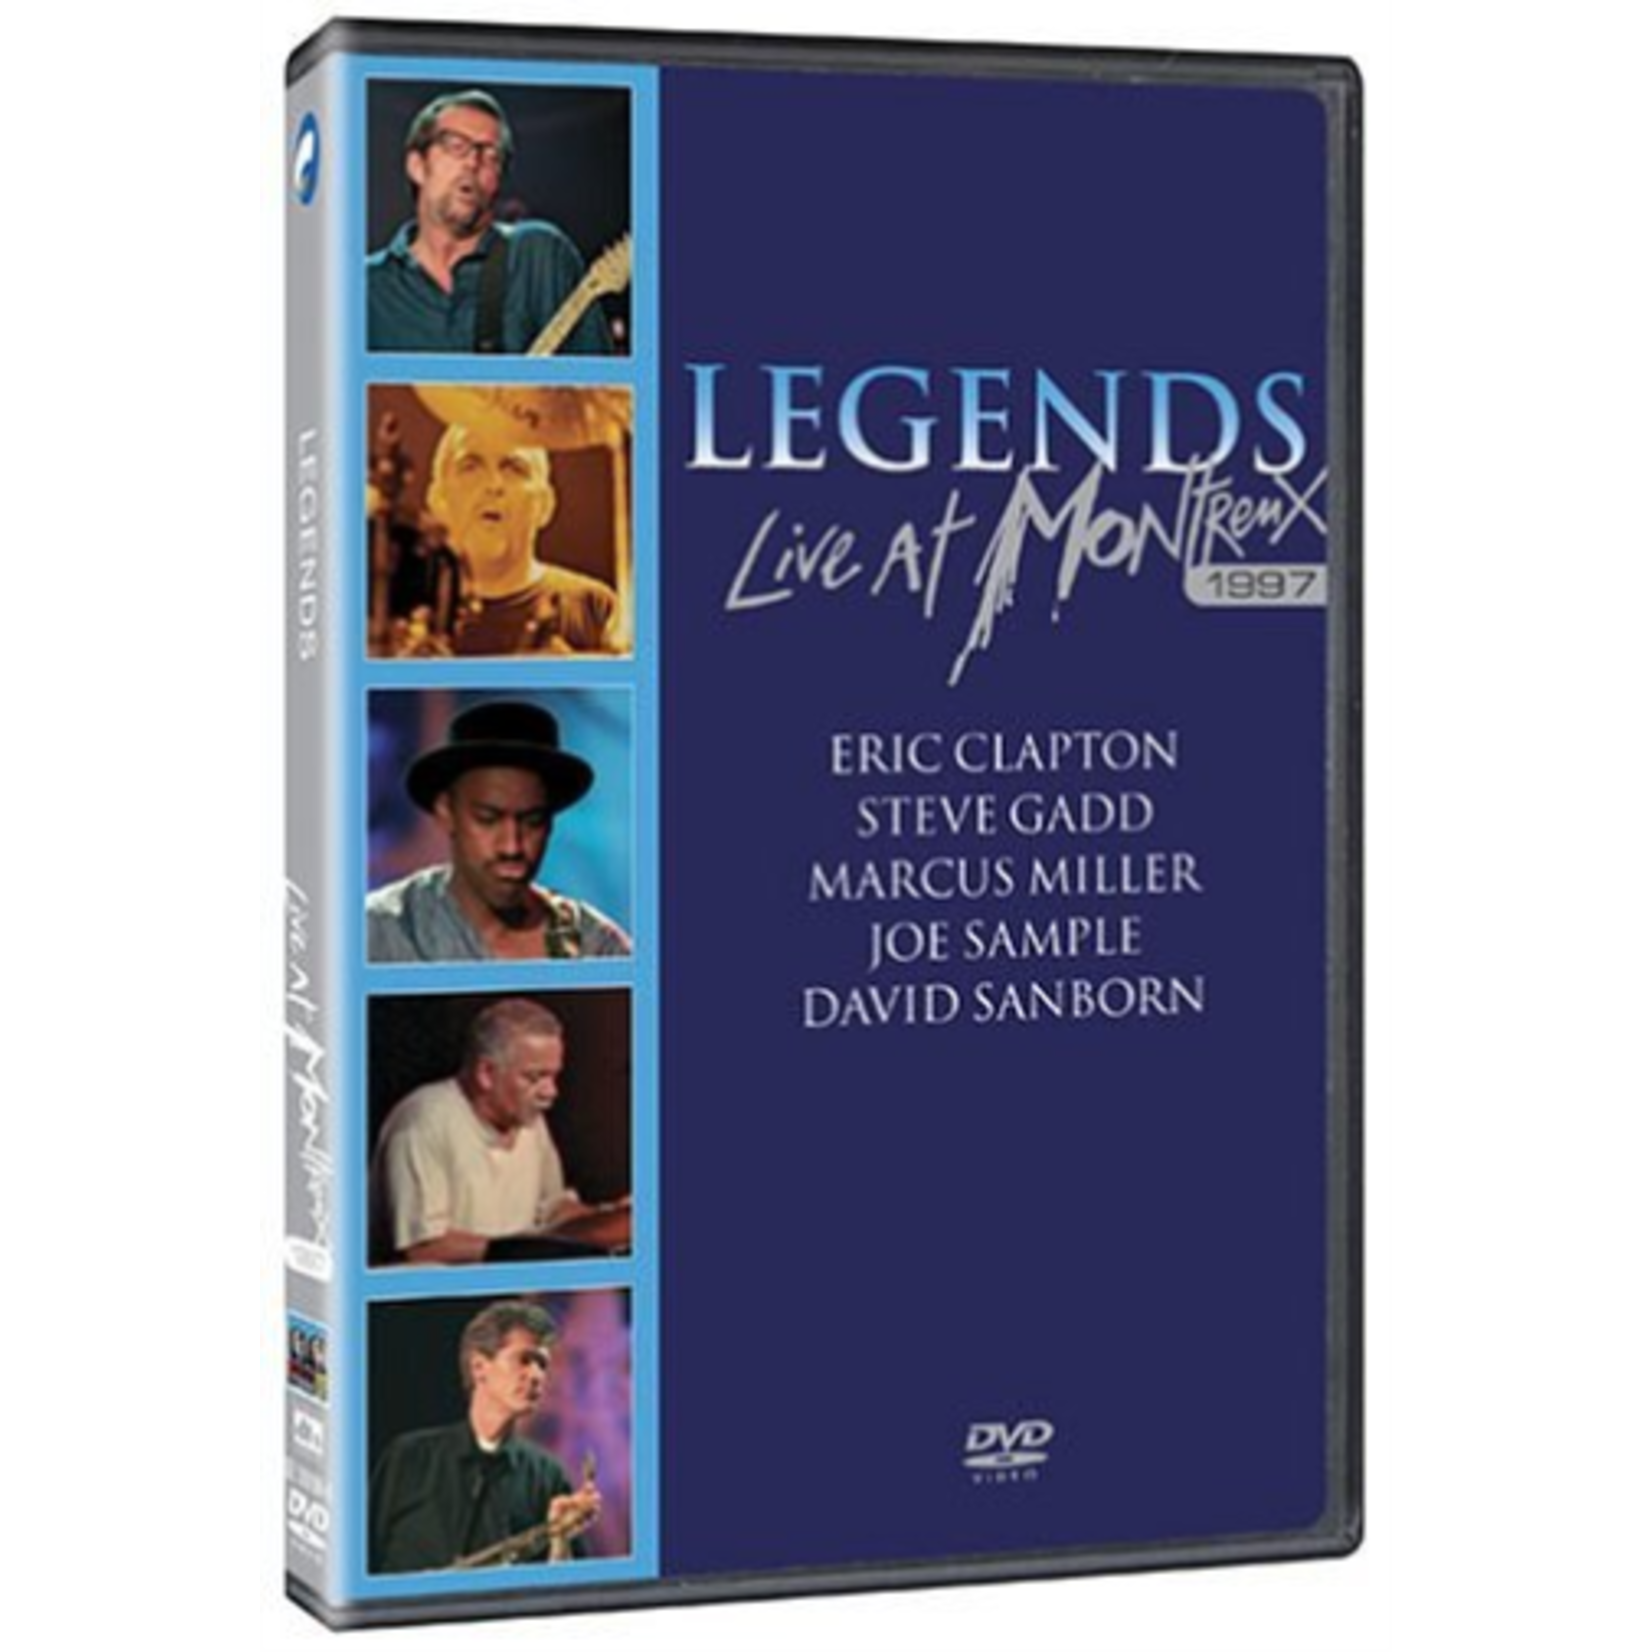 Various Artists - Legends: Live At Montreux 1997 [DVD]